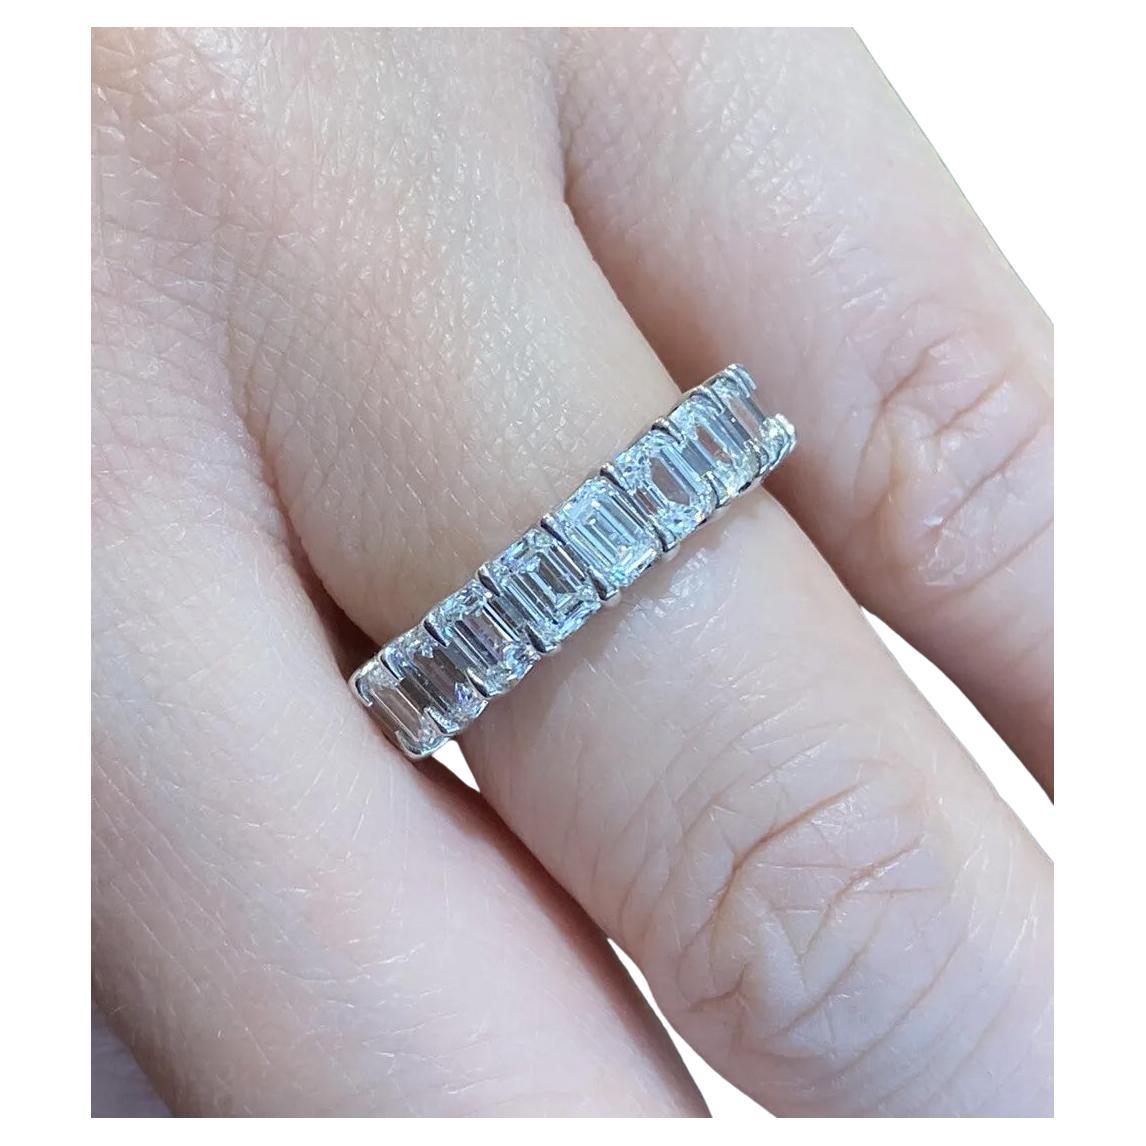 5,12 Karat Total Smaragdschliff Diamant Eternity Band Ring in Platin 5mm 6,25